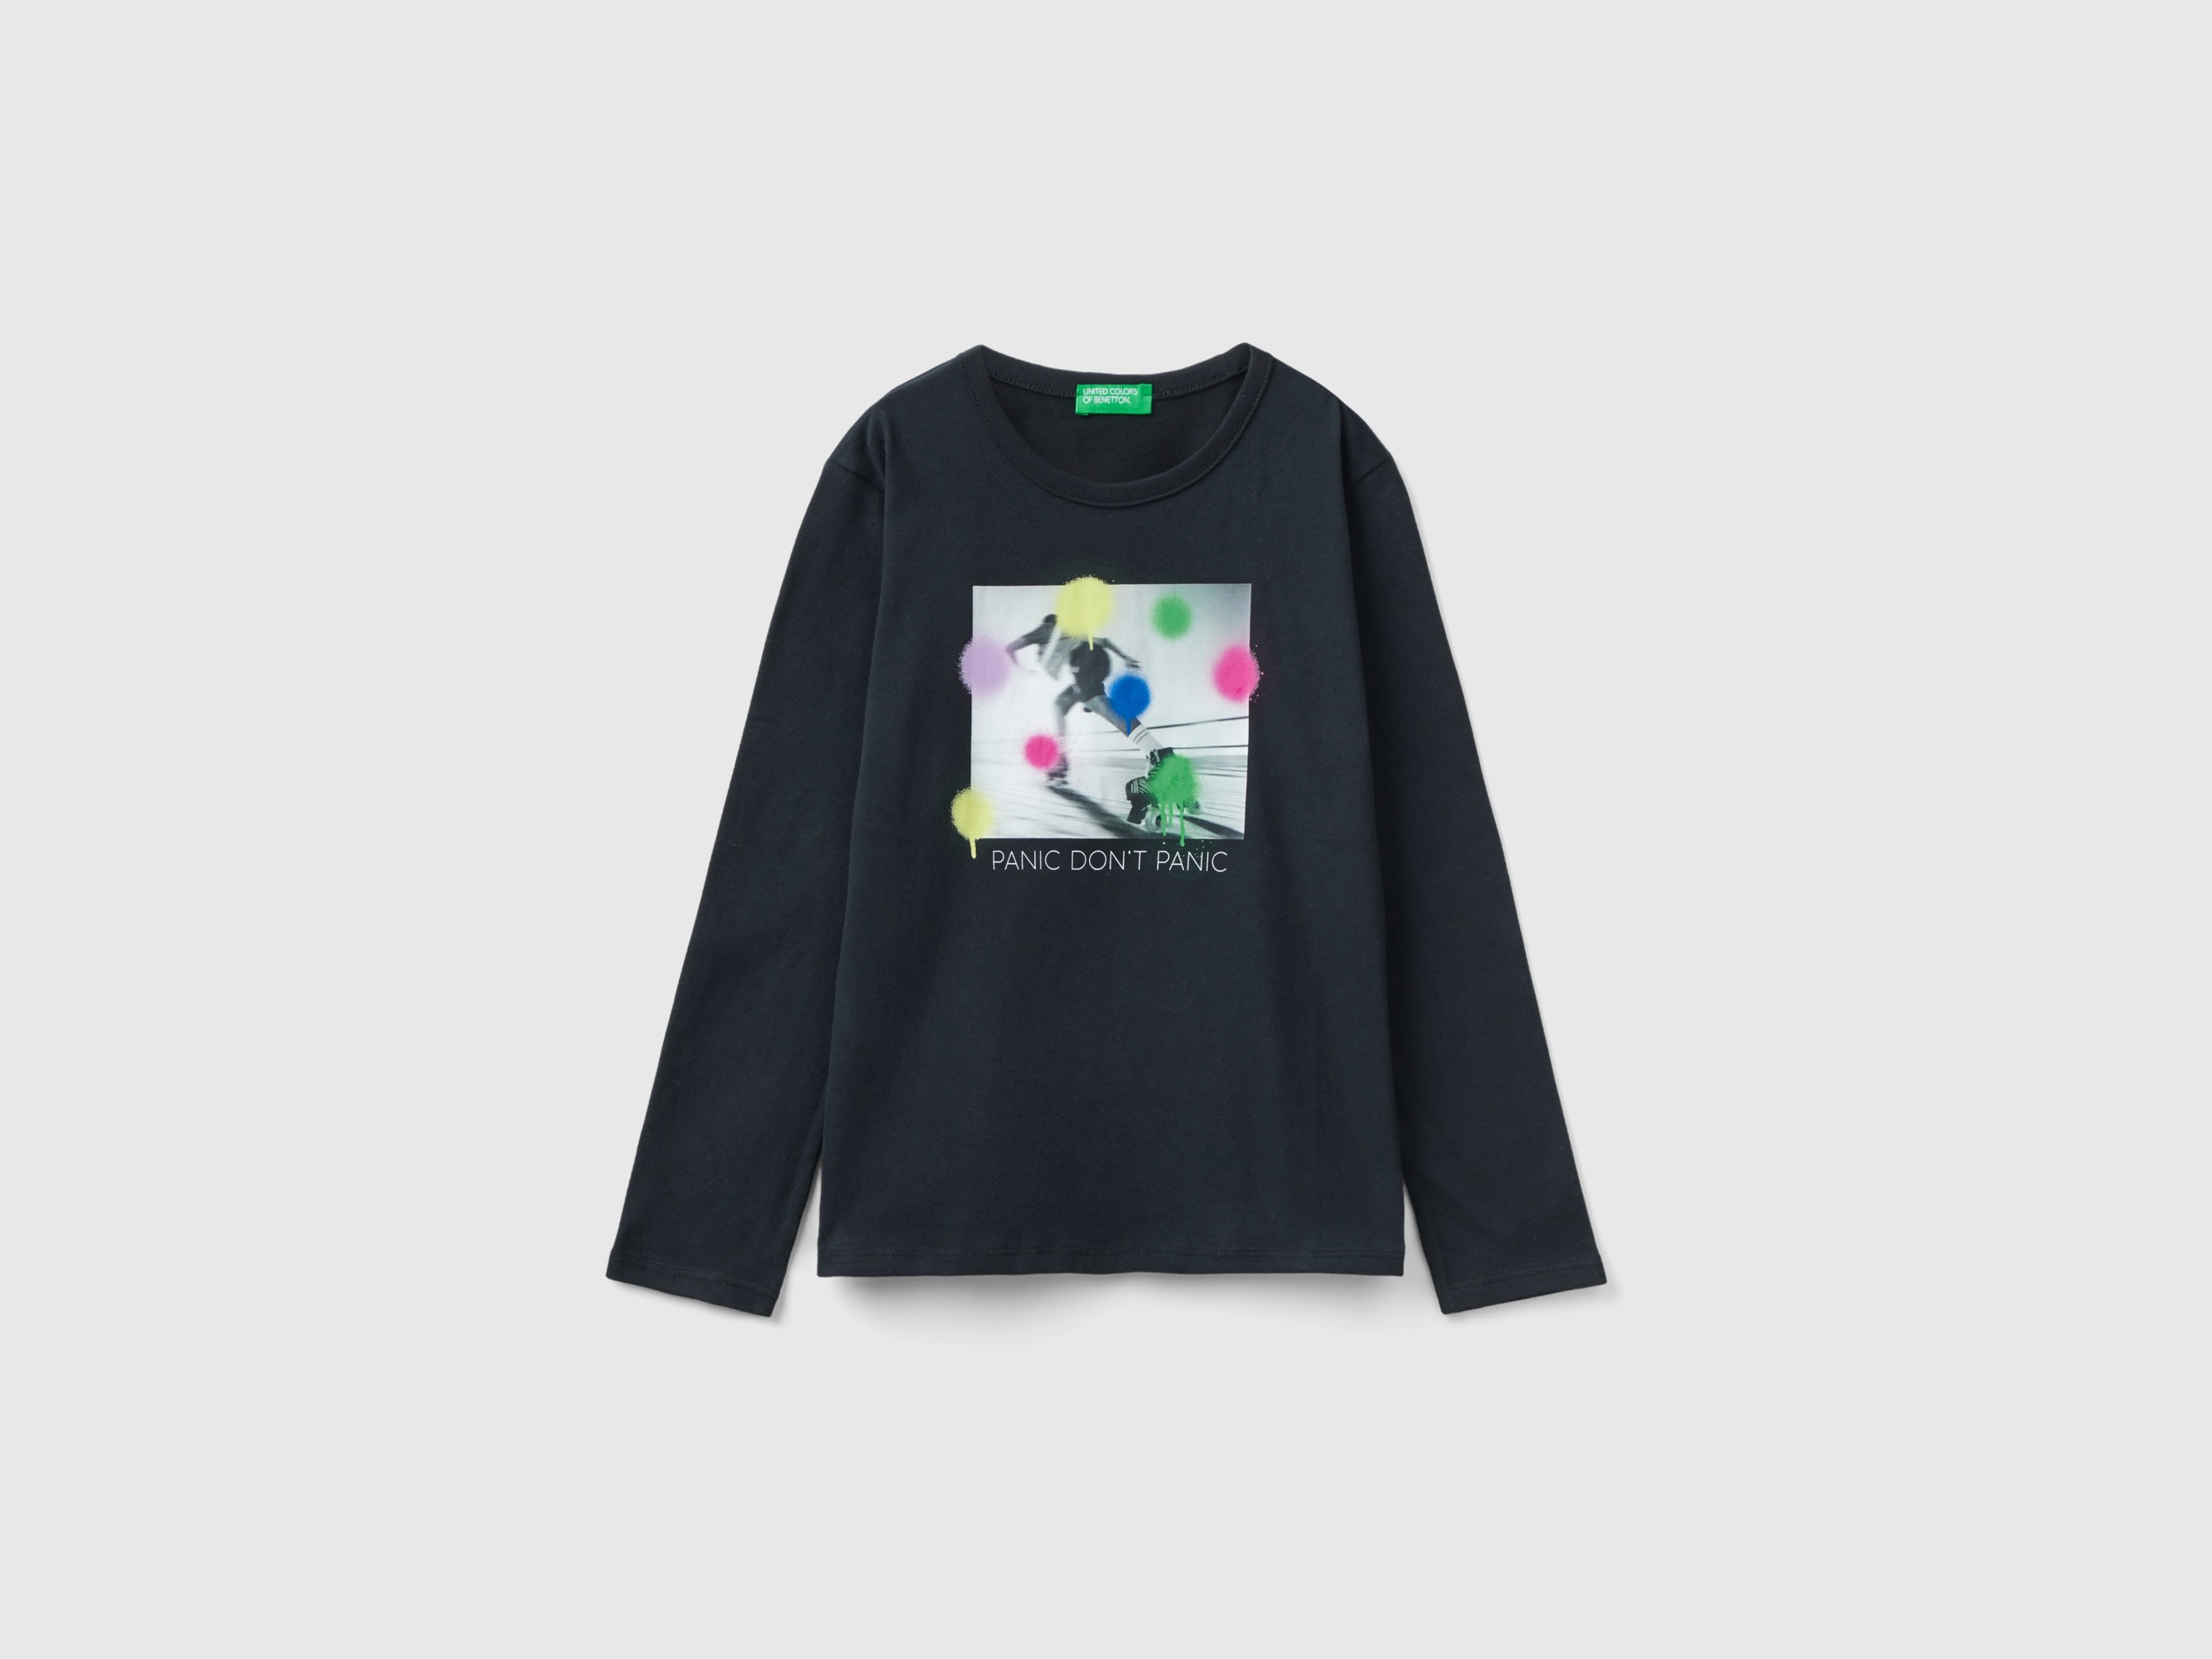 Benetton, Warm T-shirt With Photo Print, size 3XL, Black, Kids